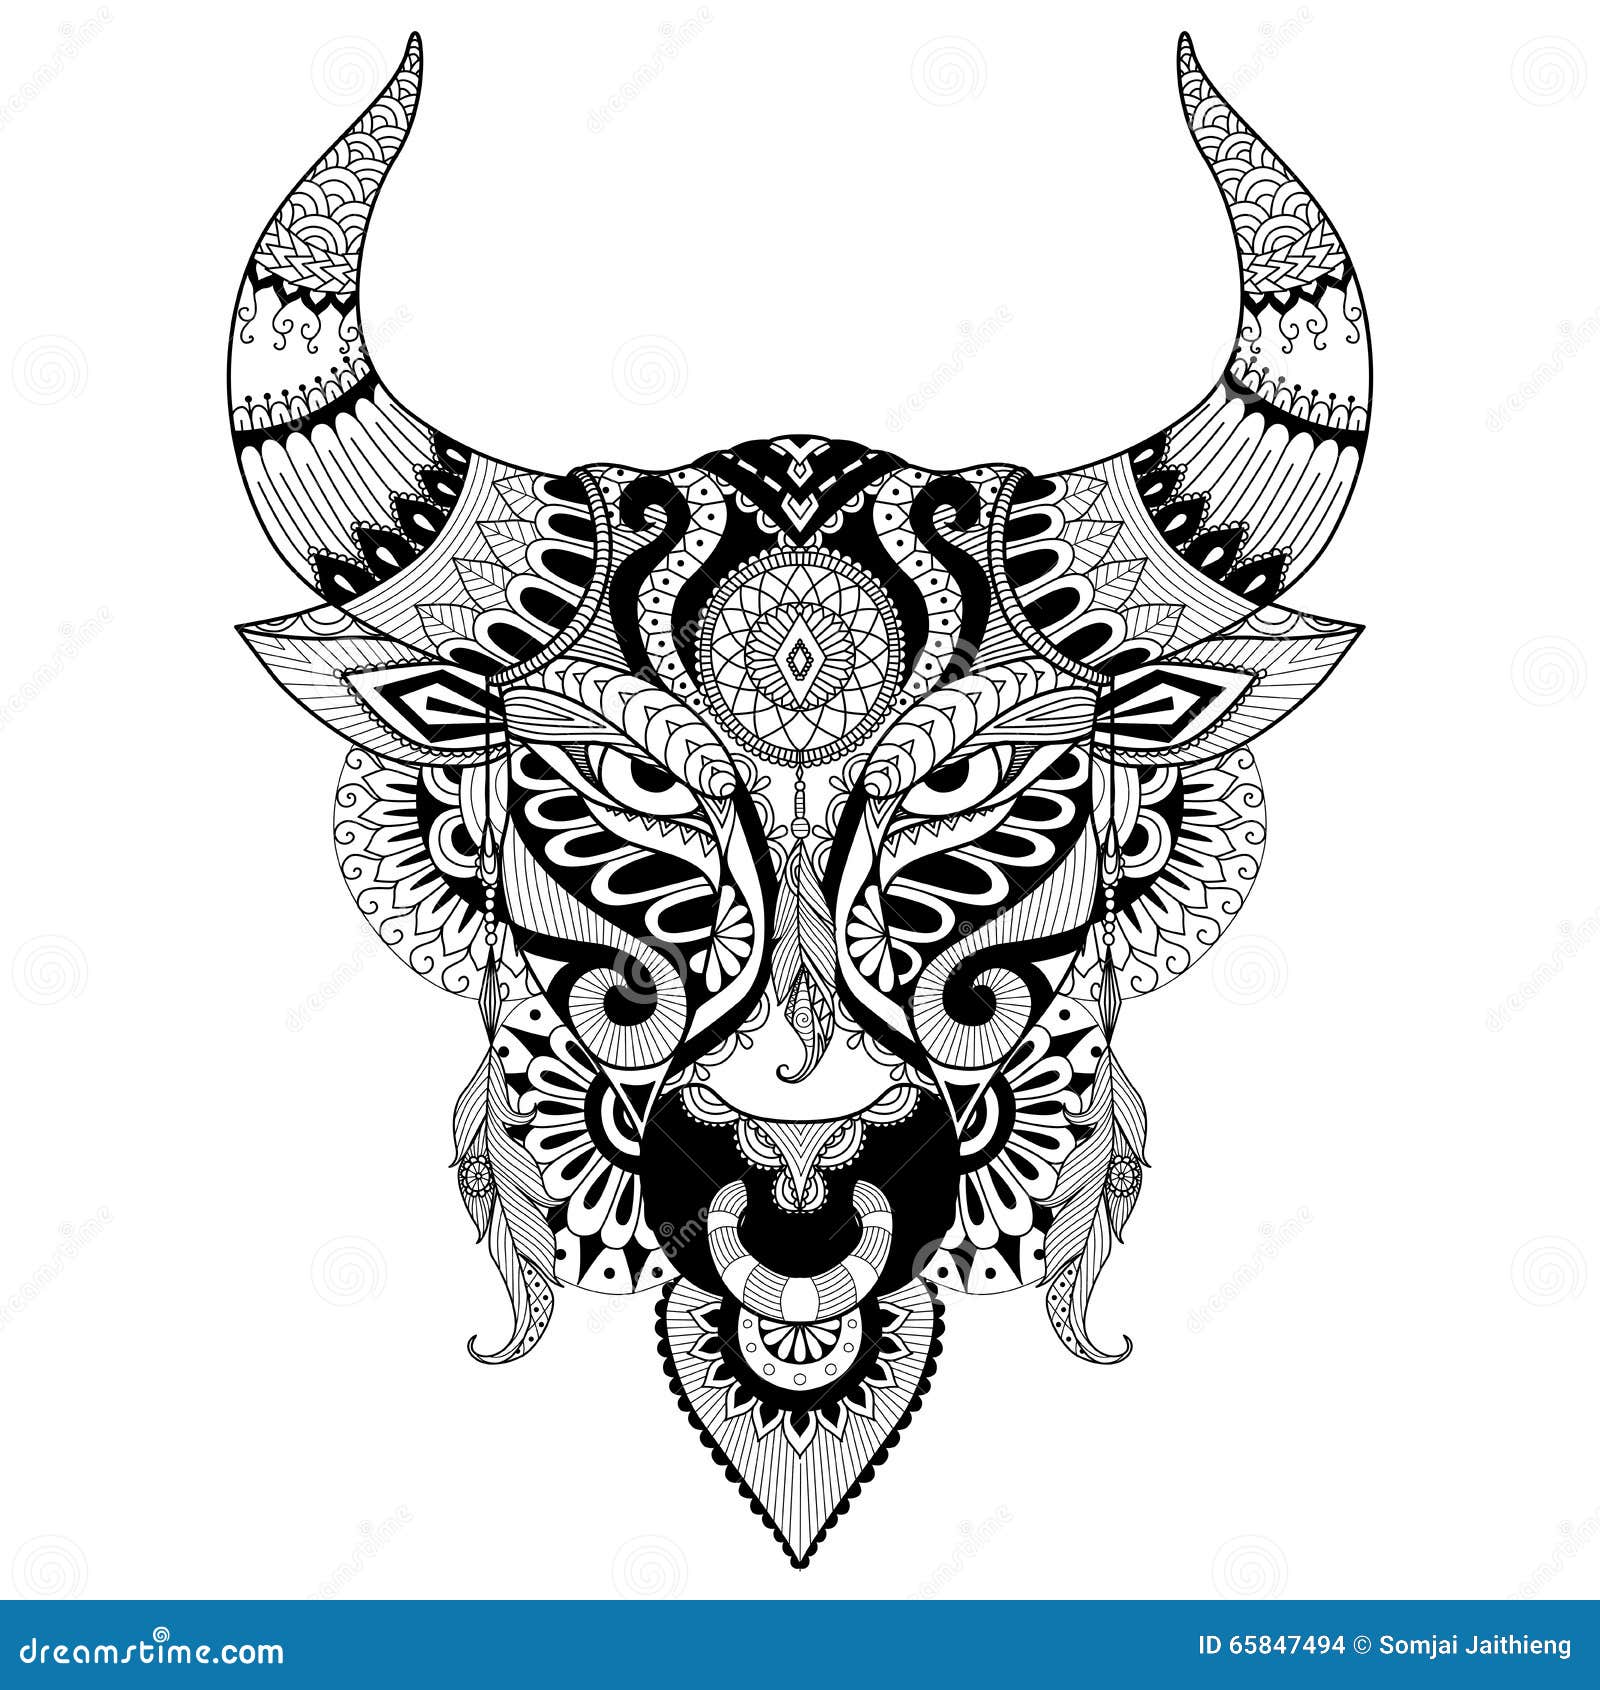 21410 Bull Head Tattoo Images Stock Photos  Vectors  Shutterstock